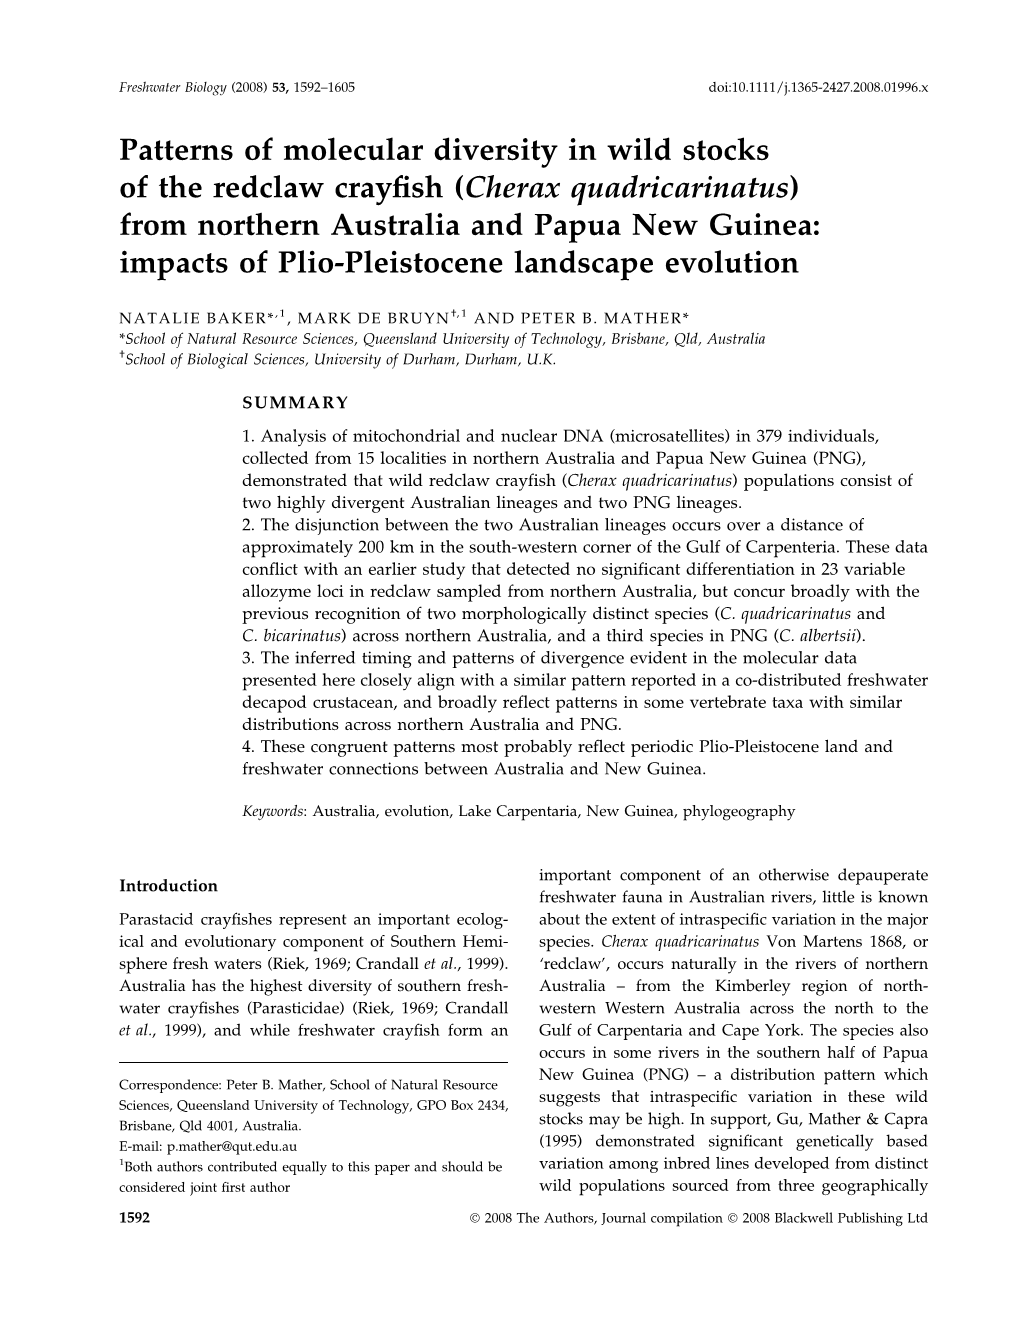 Cherax Quadricarinatus) from Northern Australia and Papua New Guinea: Impacts of Plio-Pleistocene Landscape Evolution